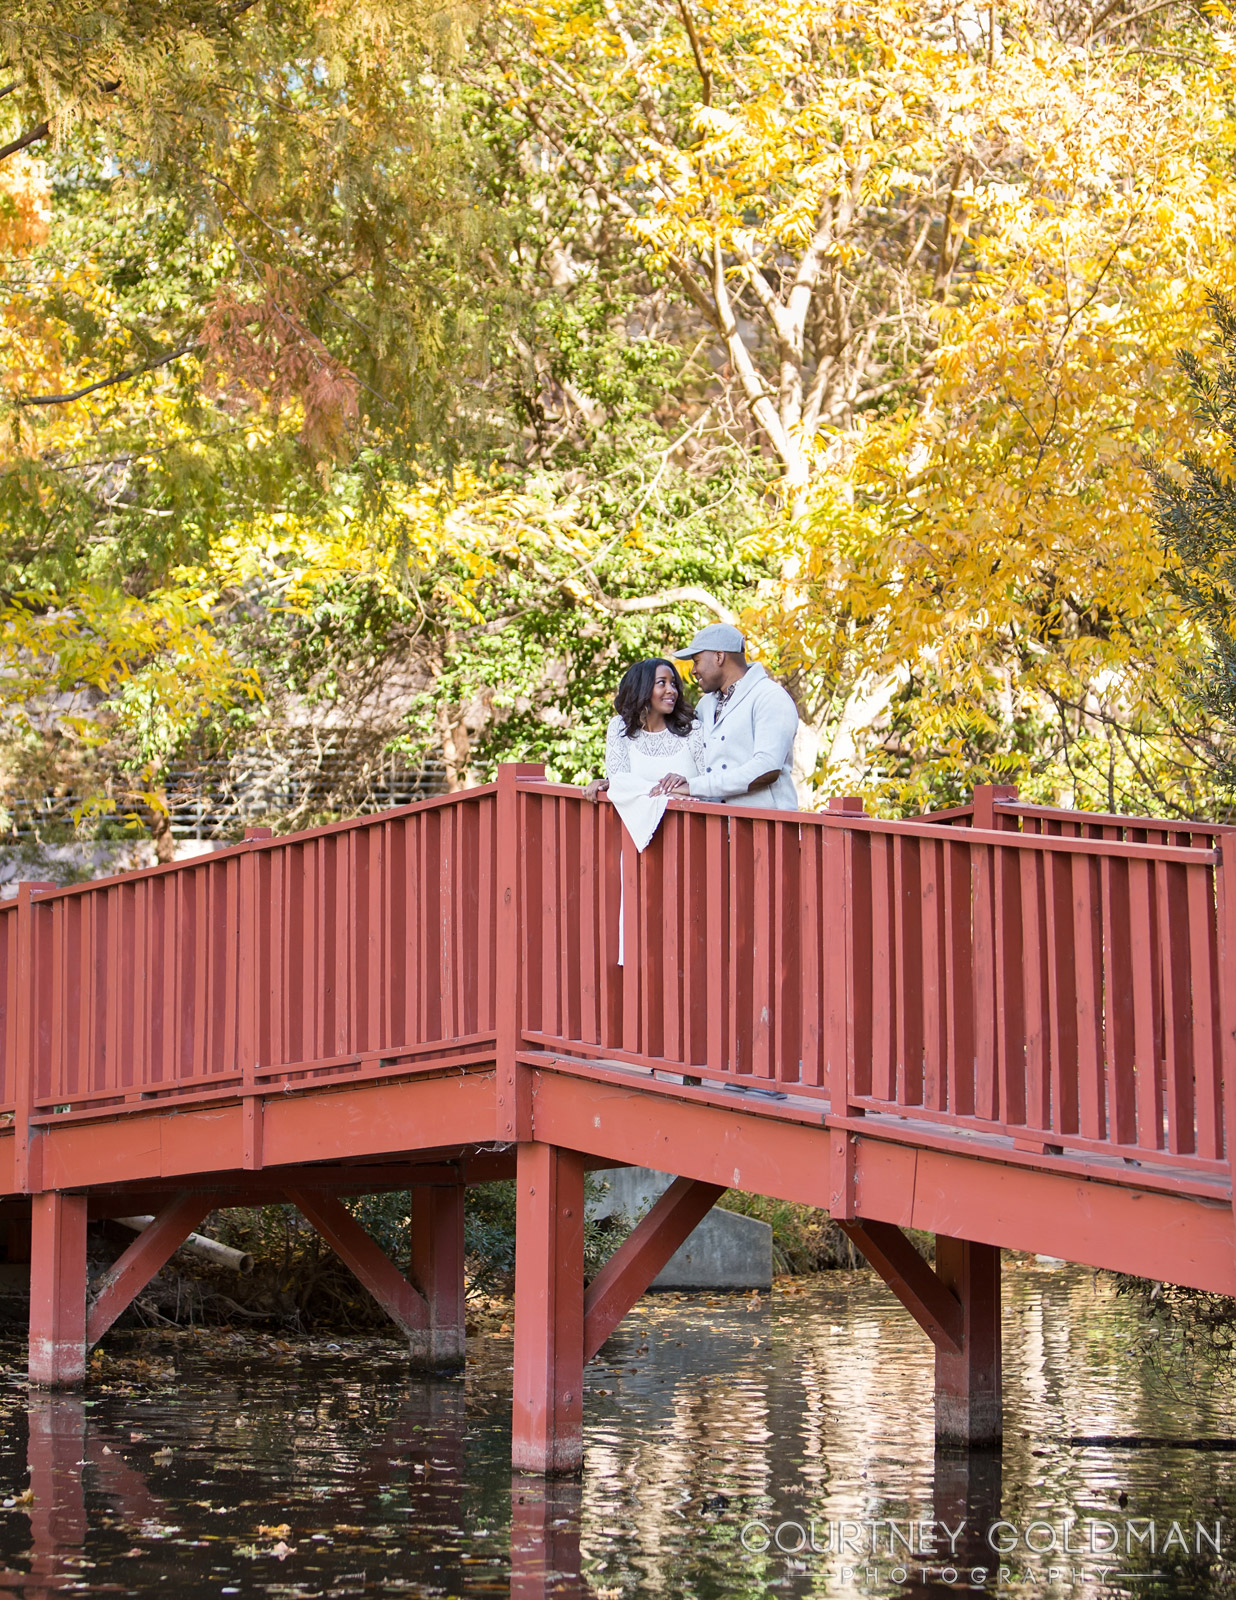 Atlanta-Couples-Engagement-Proposal-Photography-by-Courtney-Goldman-48.jpg